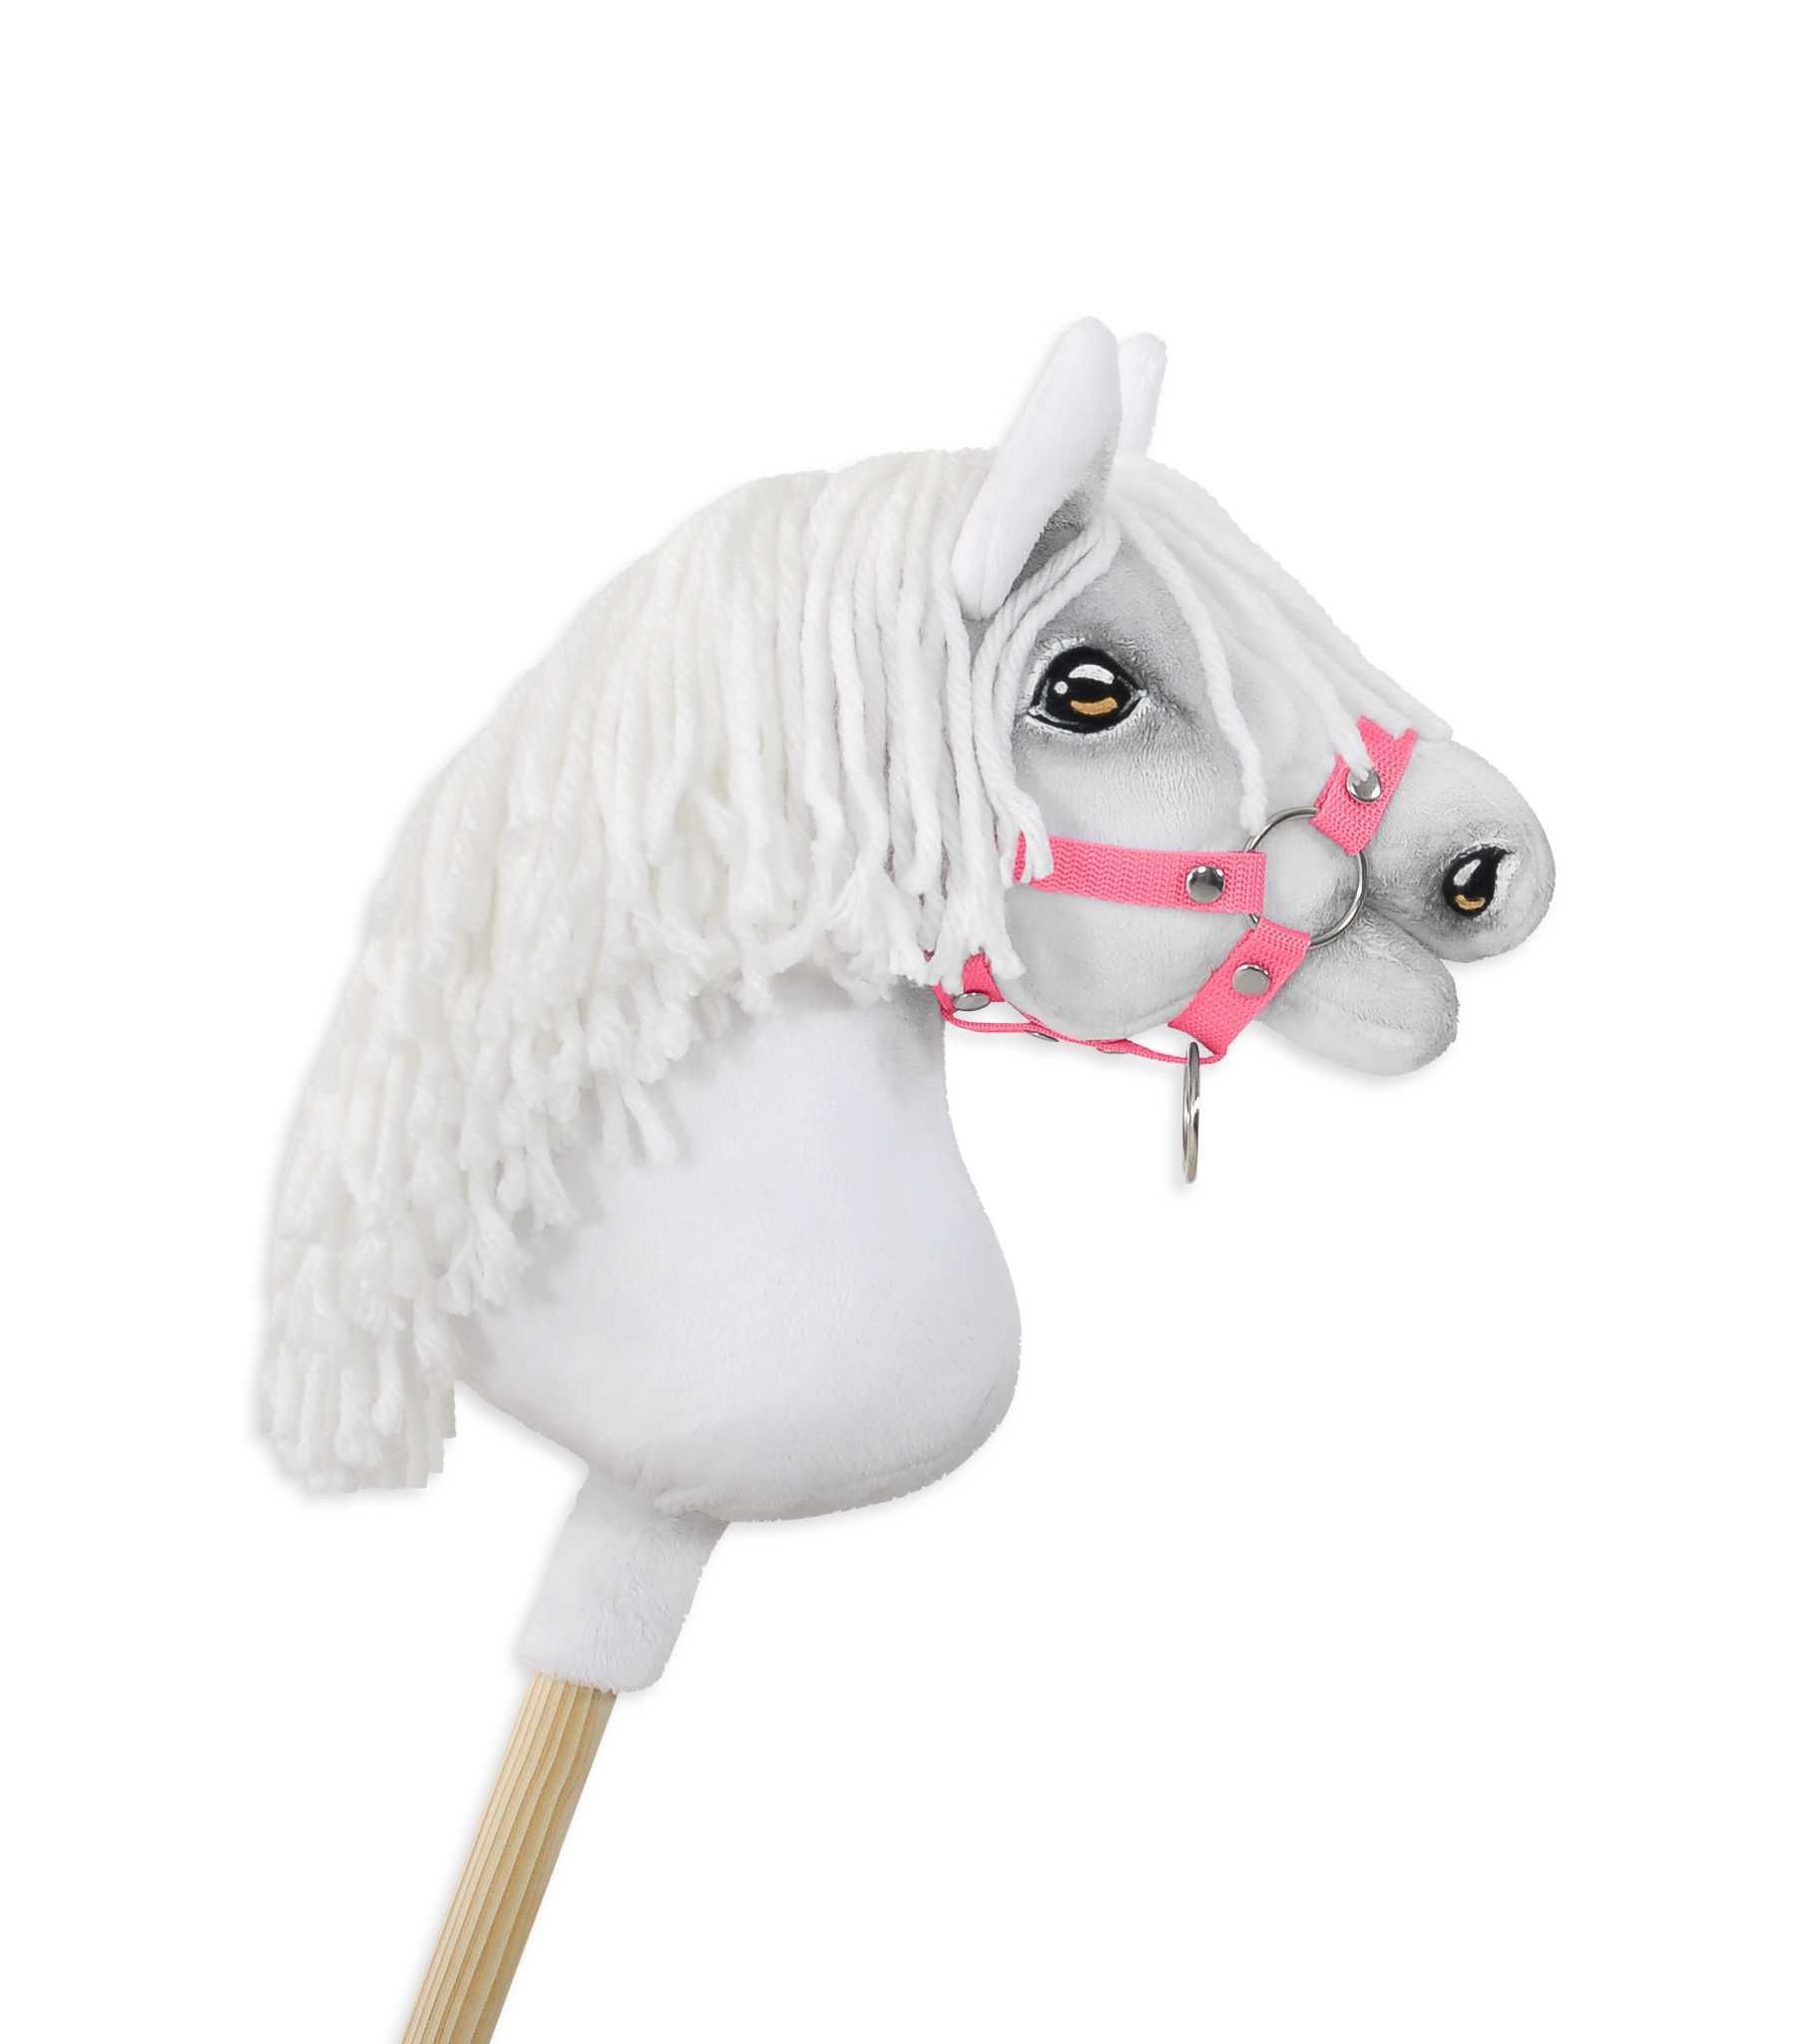 Kantar dla konia Hobby Horse A4 zapinany mały - różowy!